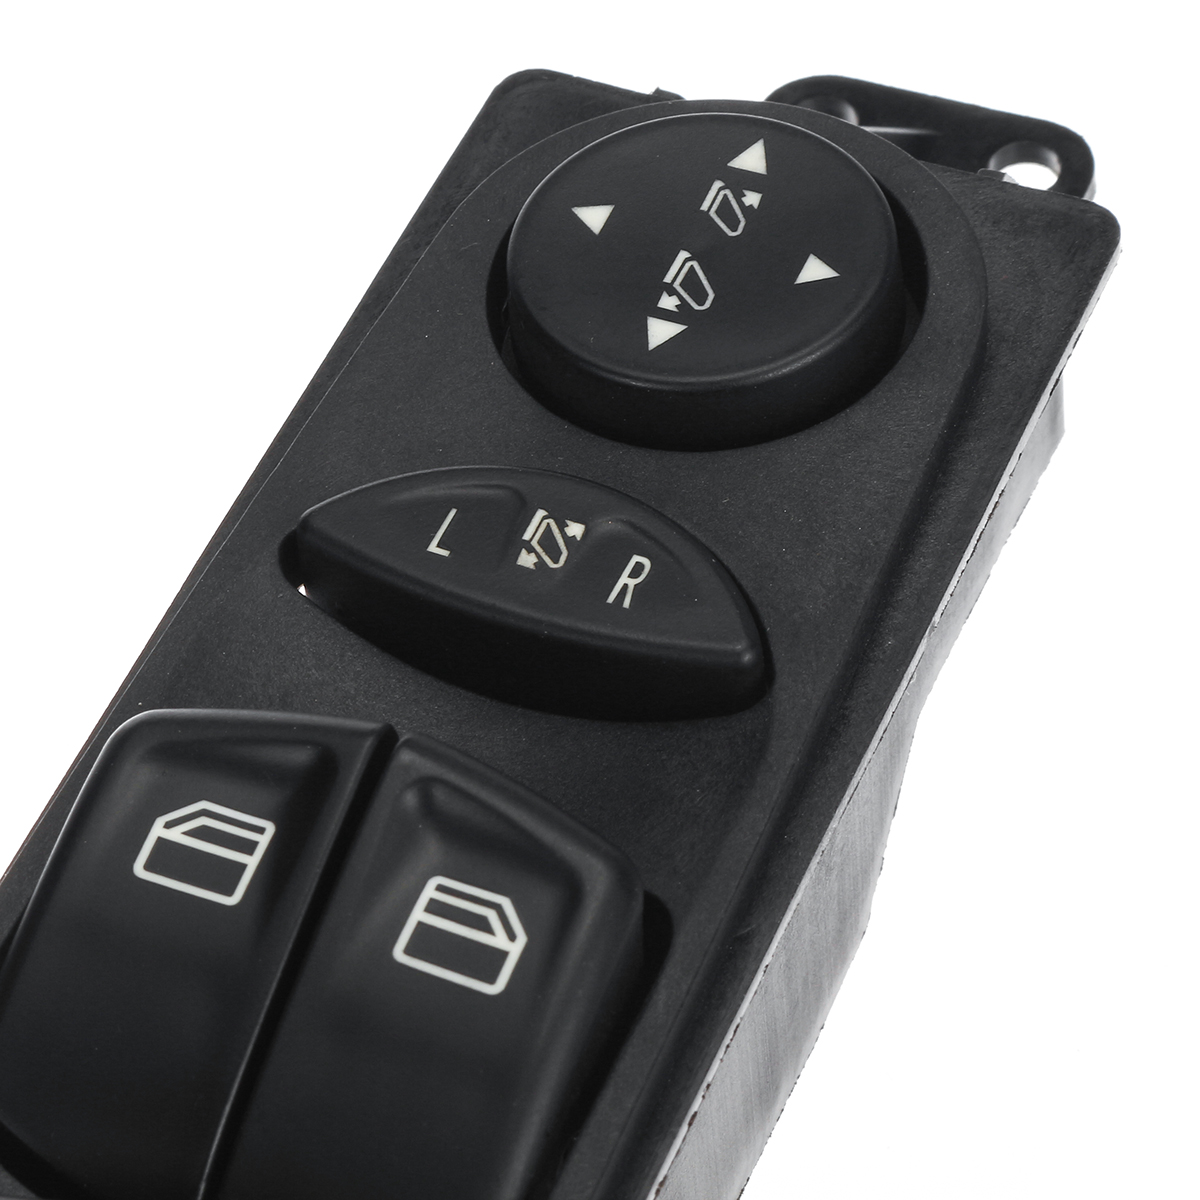 Power Master Window Switch for Mercedes Benz Viano Vito W639 - Auto GoShop